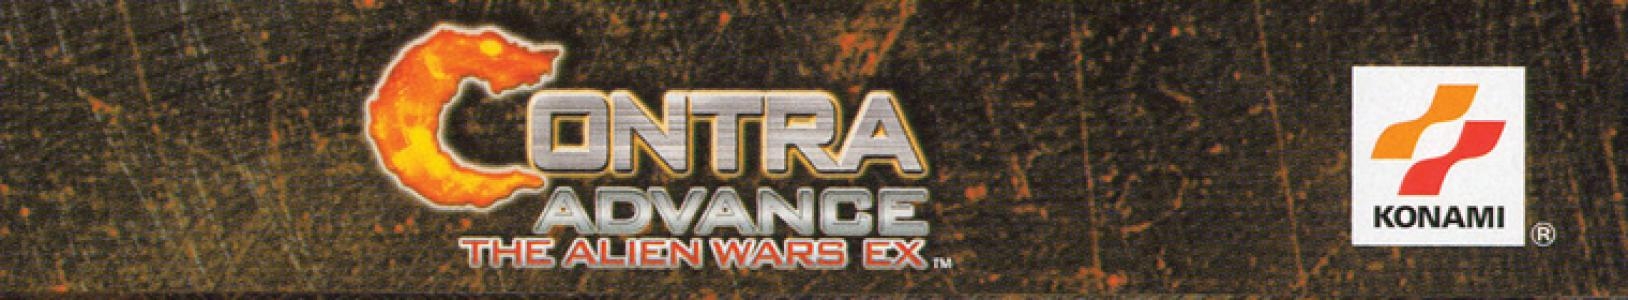 Contra Advance: The Alien Wars EX banner